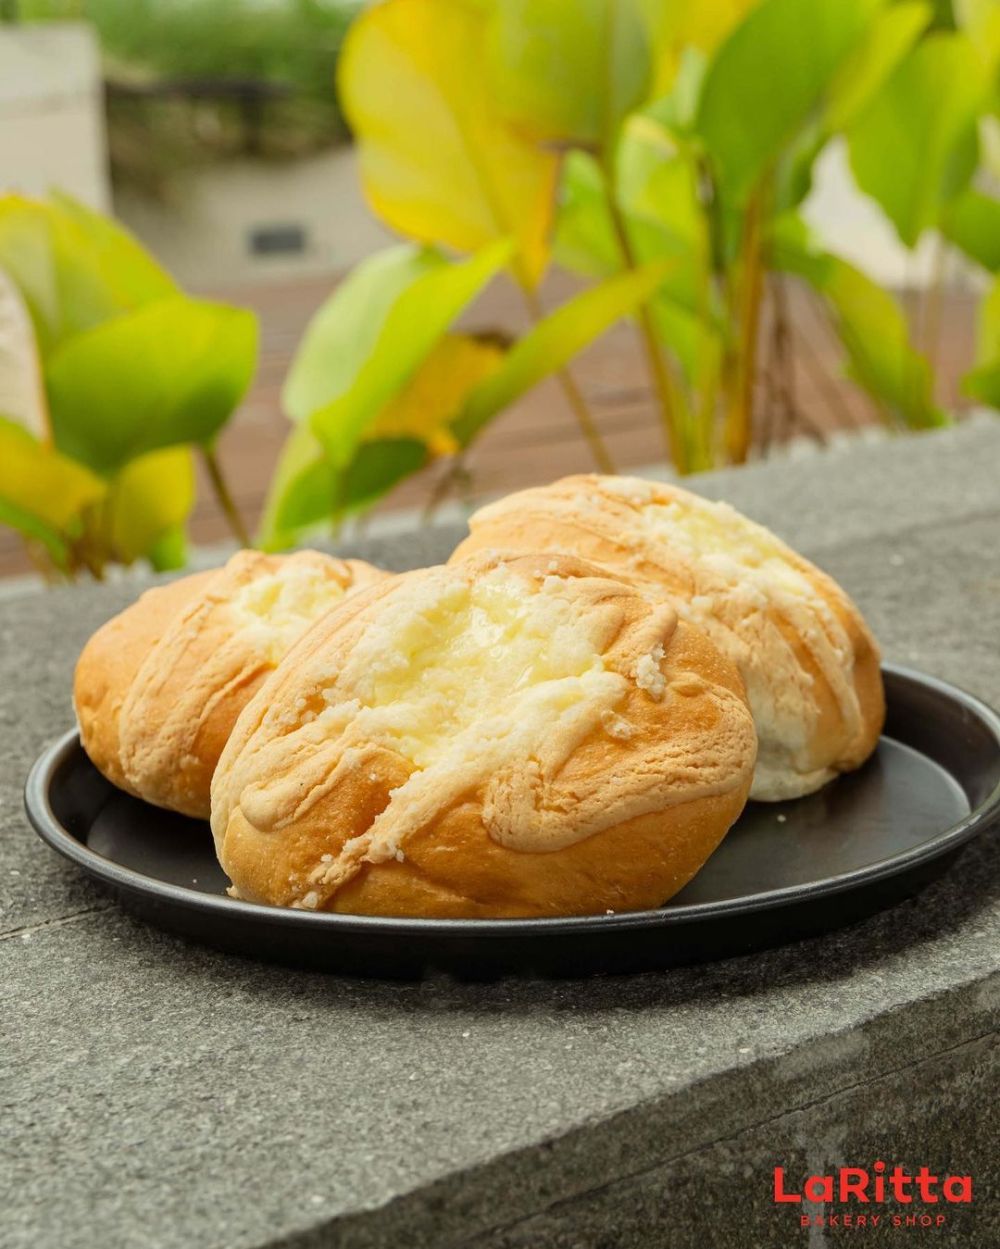 7 Rekomendasi Toko Roti di Surabaya, Ada yang Khas Korea